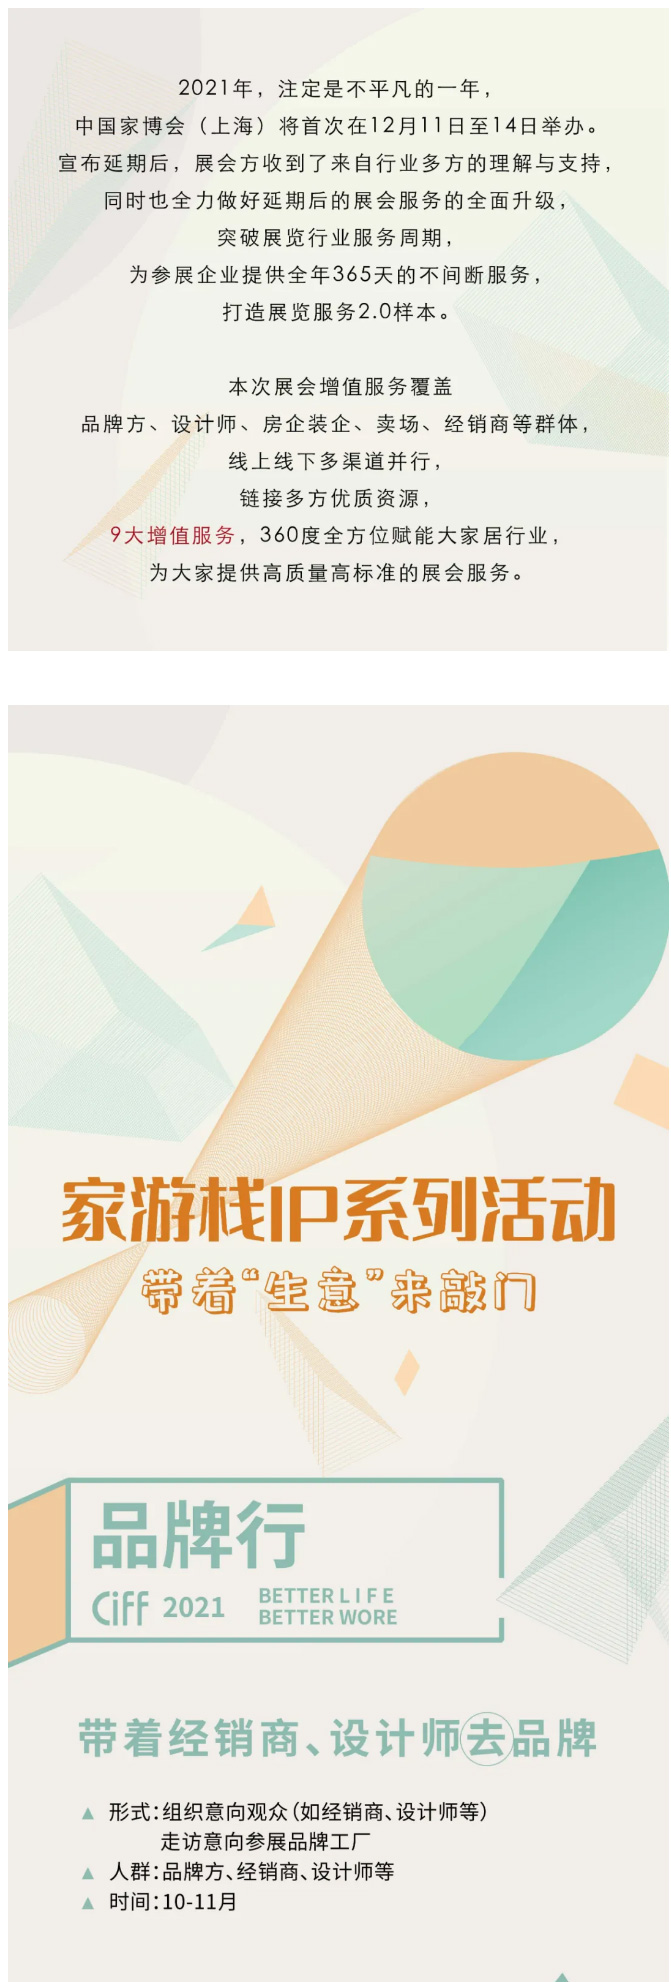 CIFF上海虹桥--增值服务行动方案_01.jpg